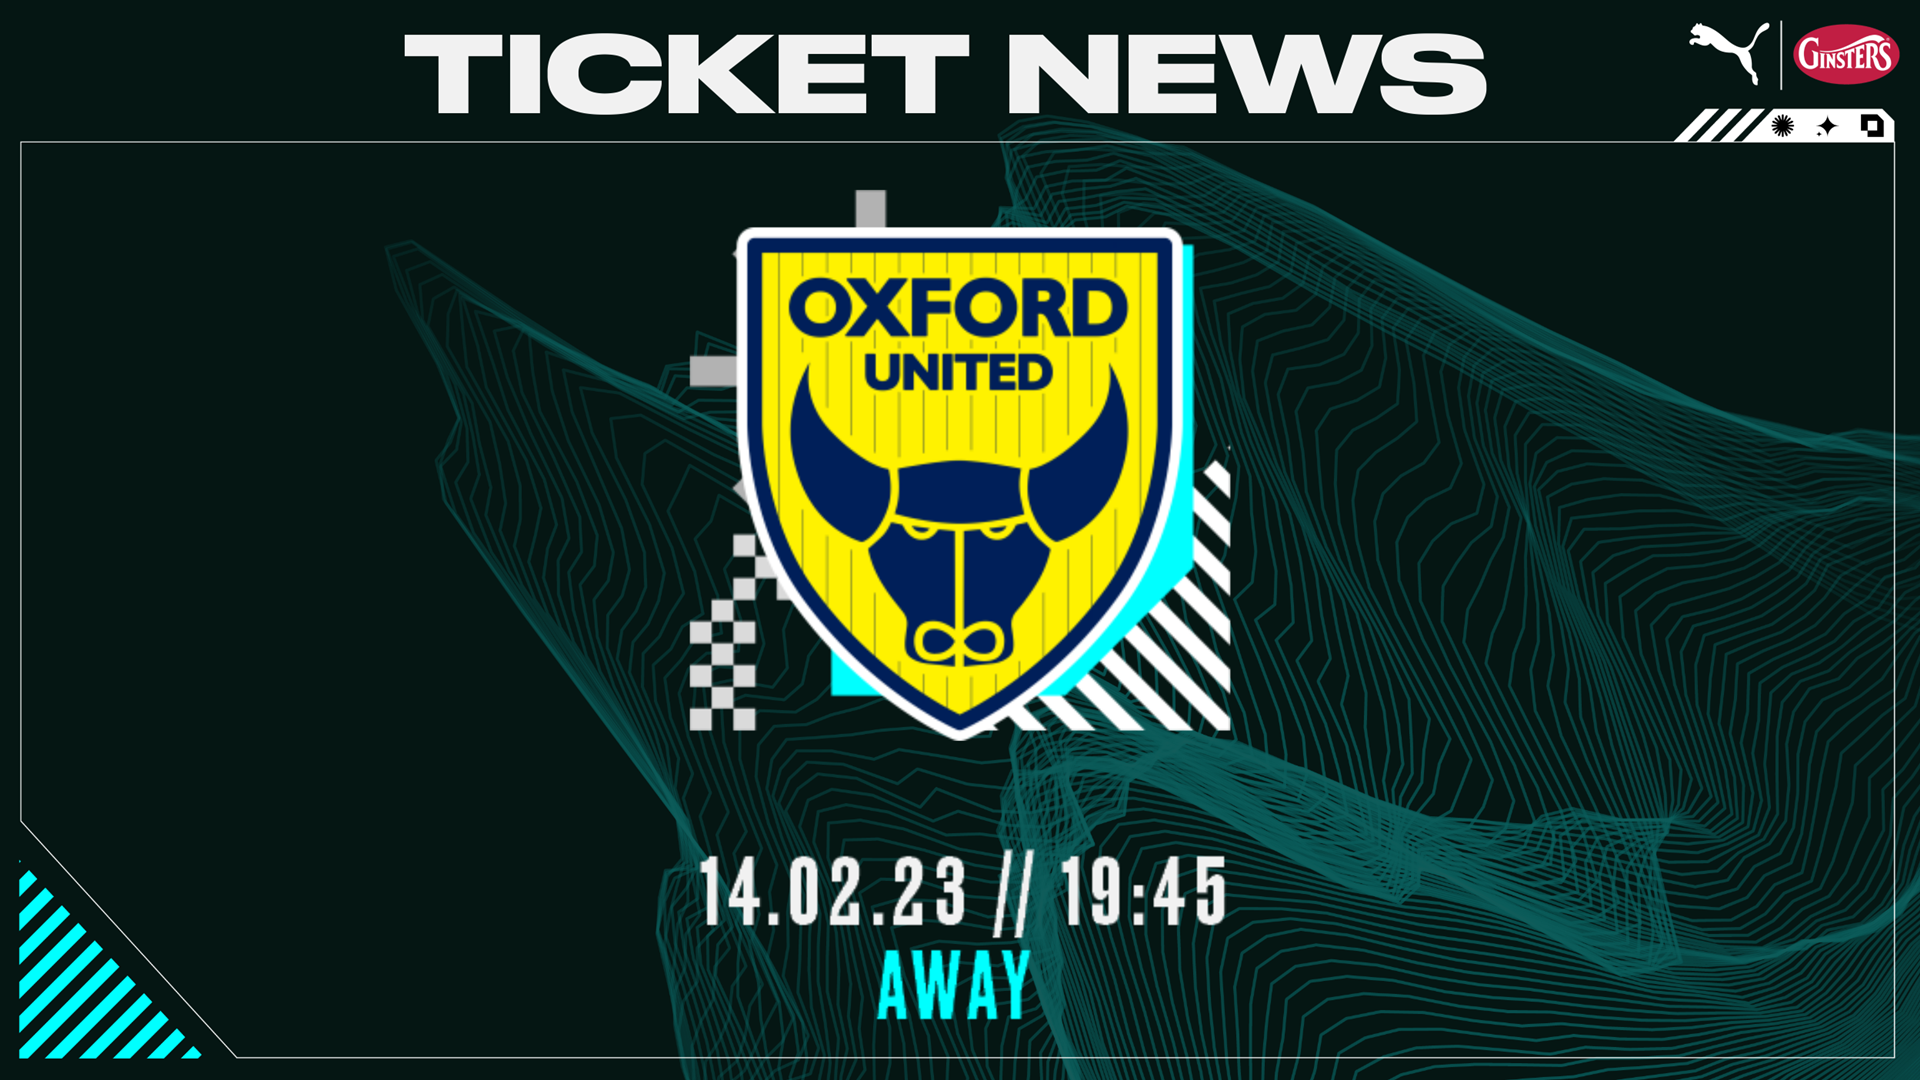 Oxford Tickets